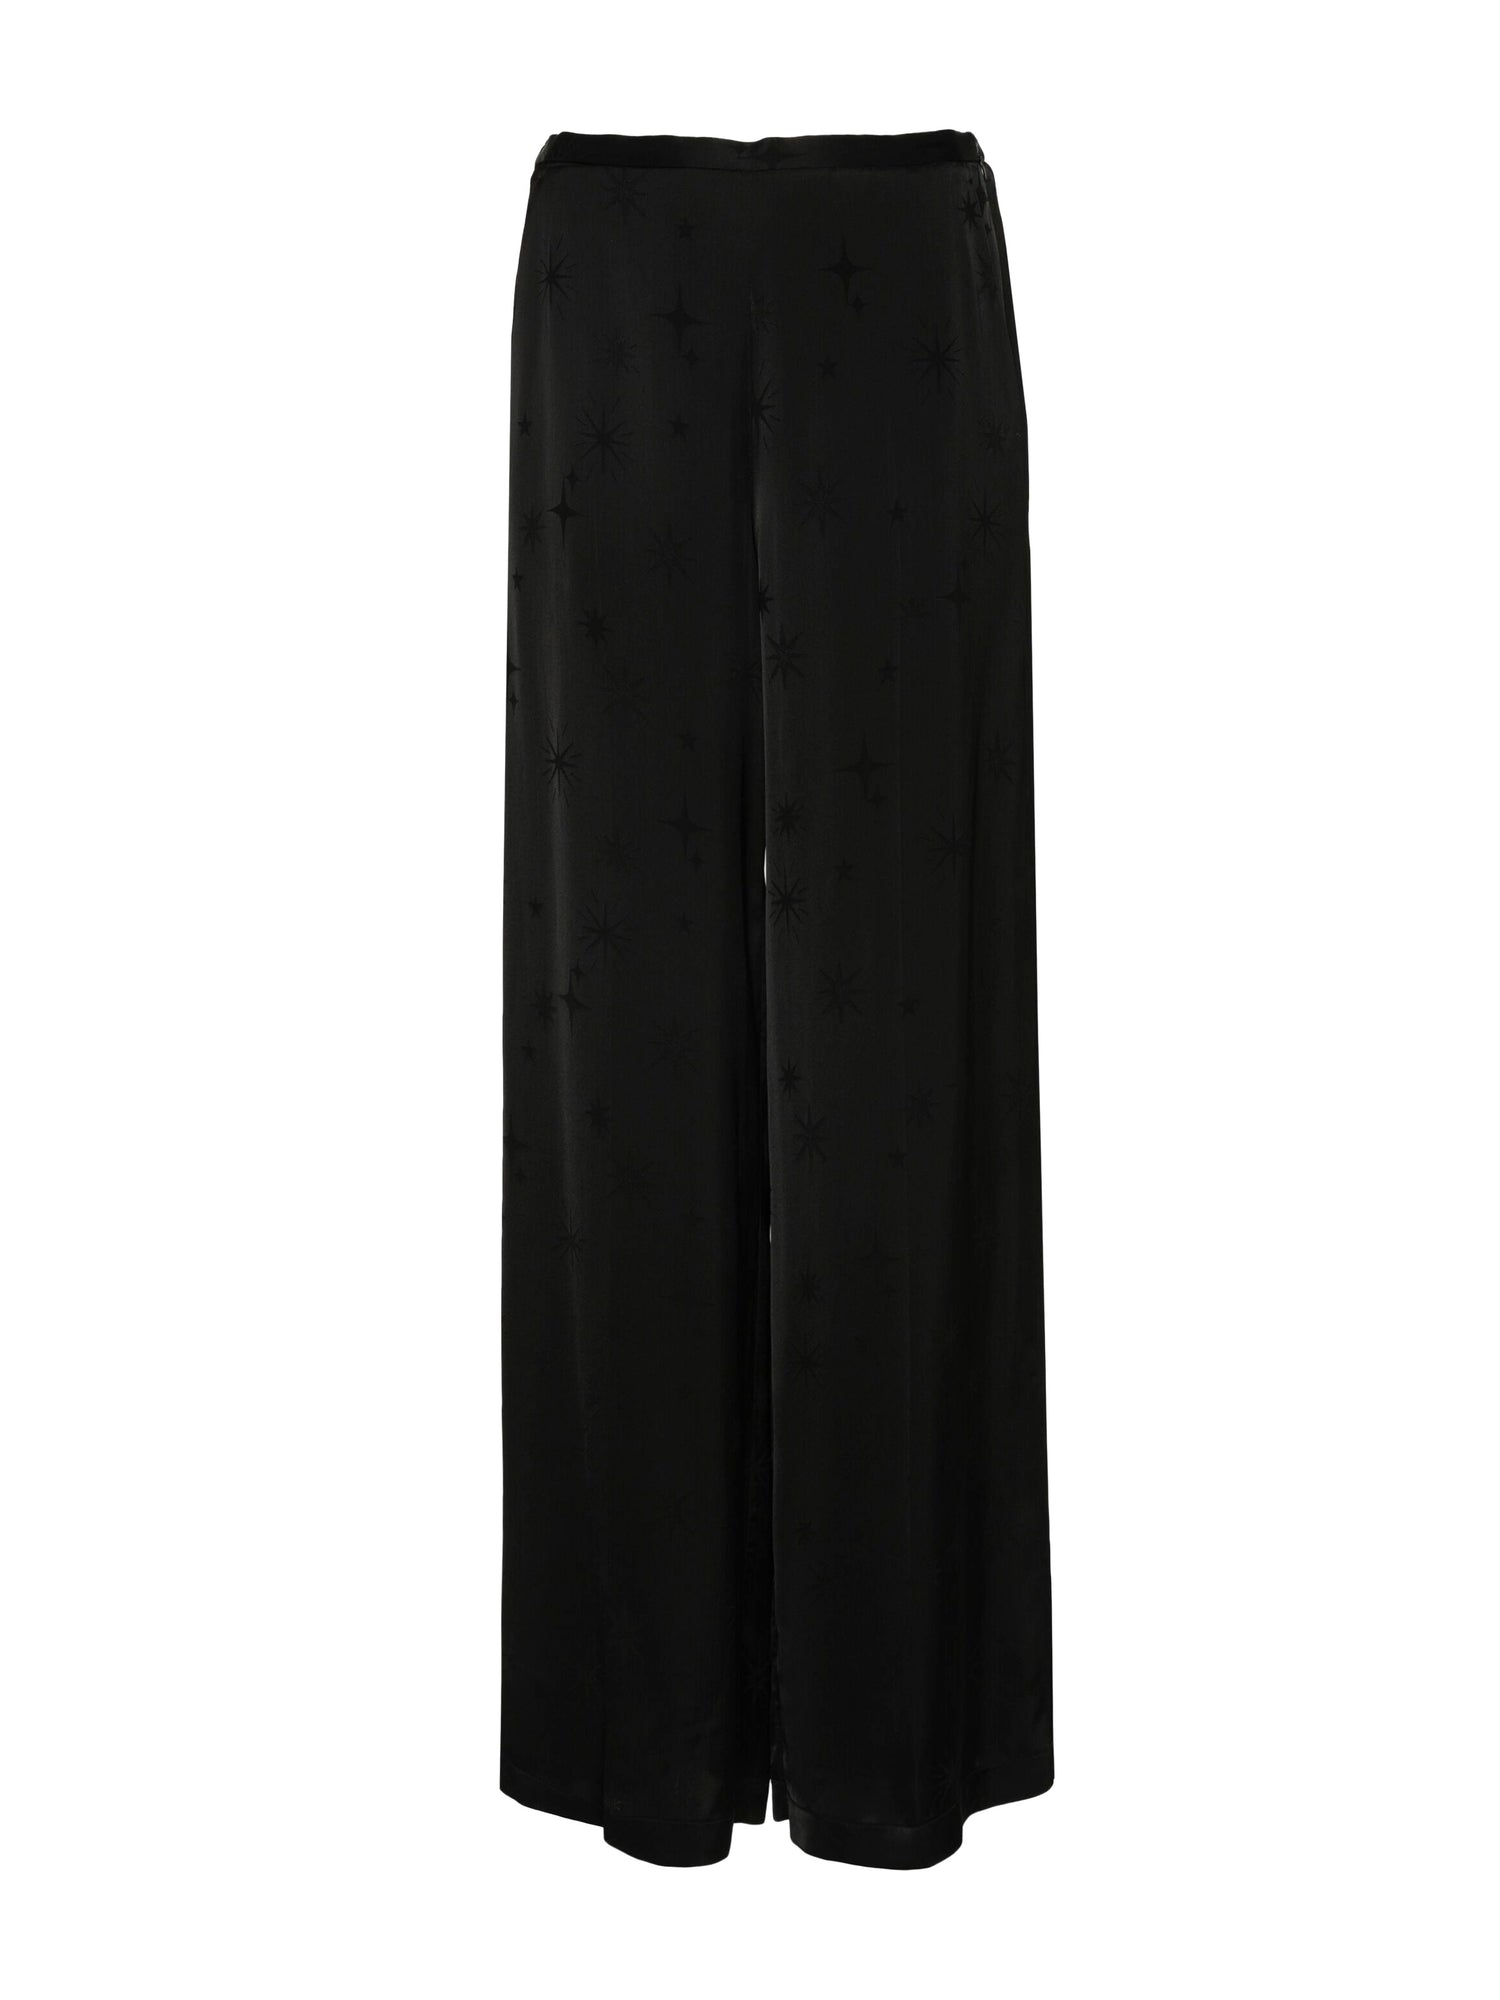 Satin patterned-jacquard palazzo pants, black